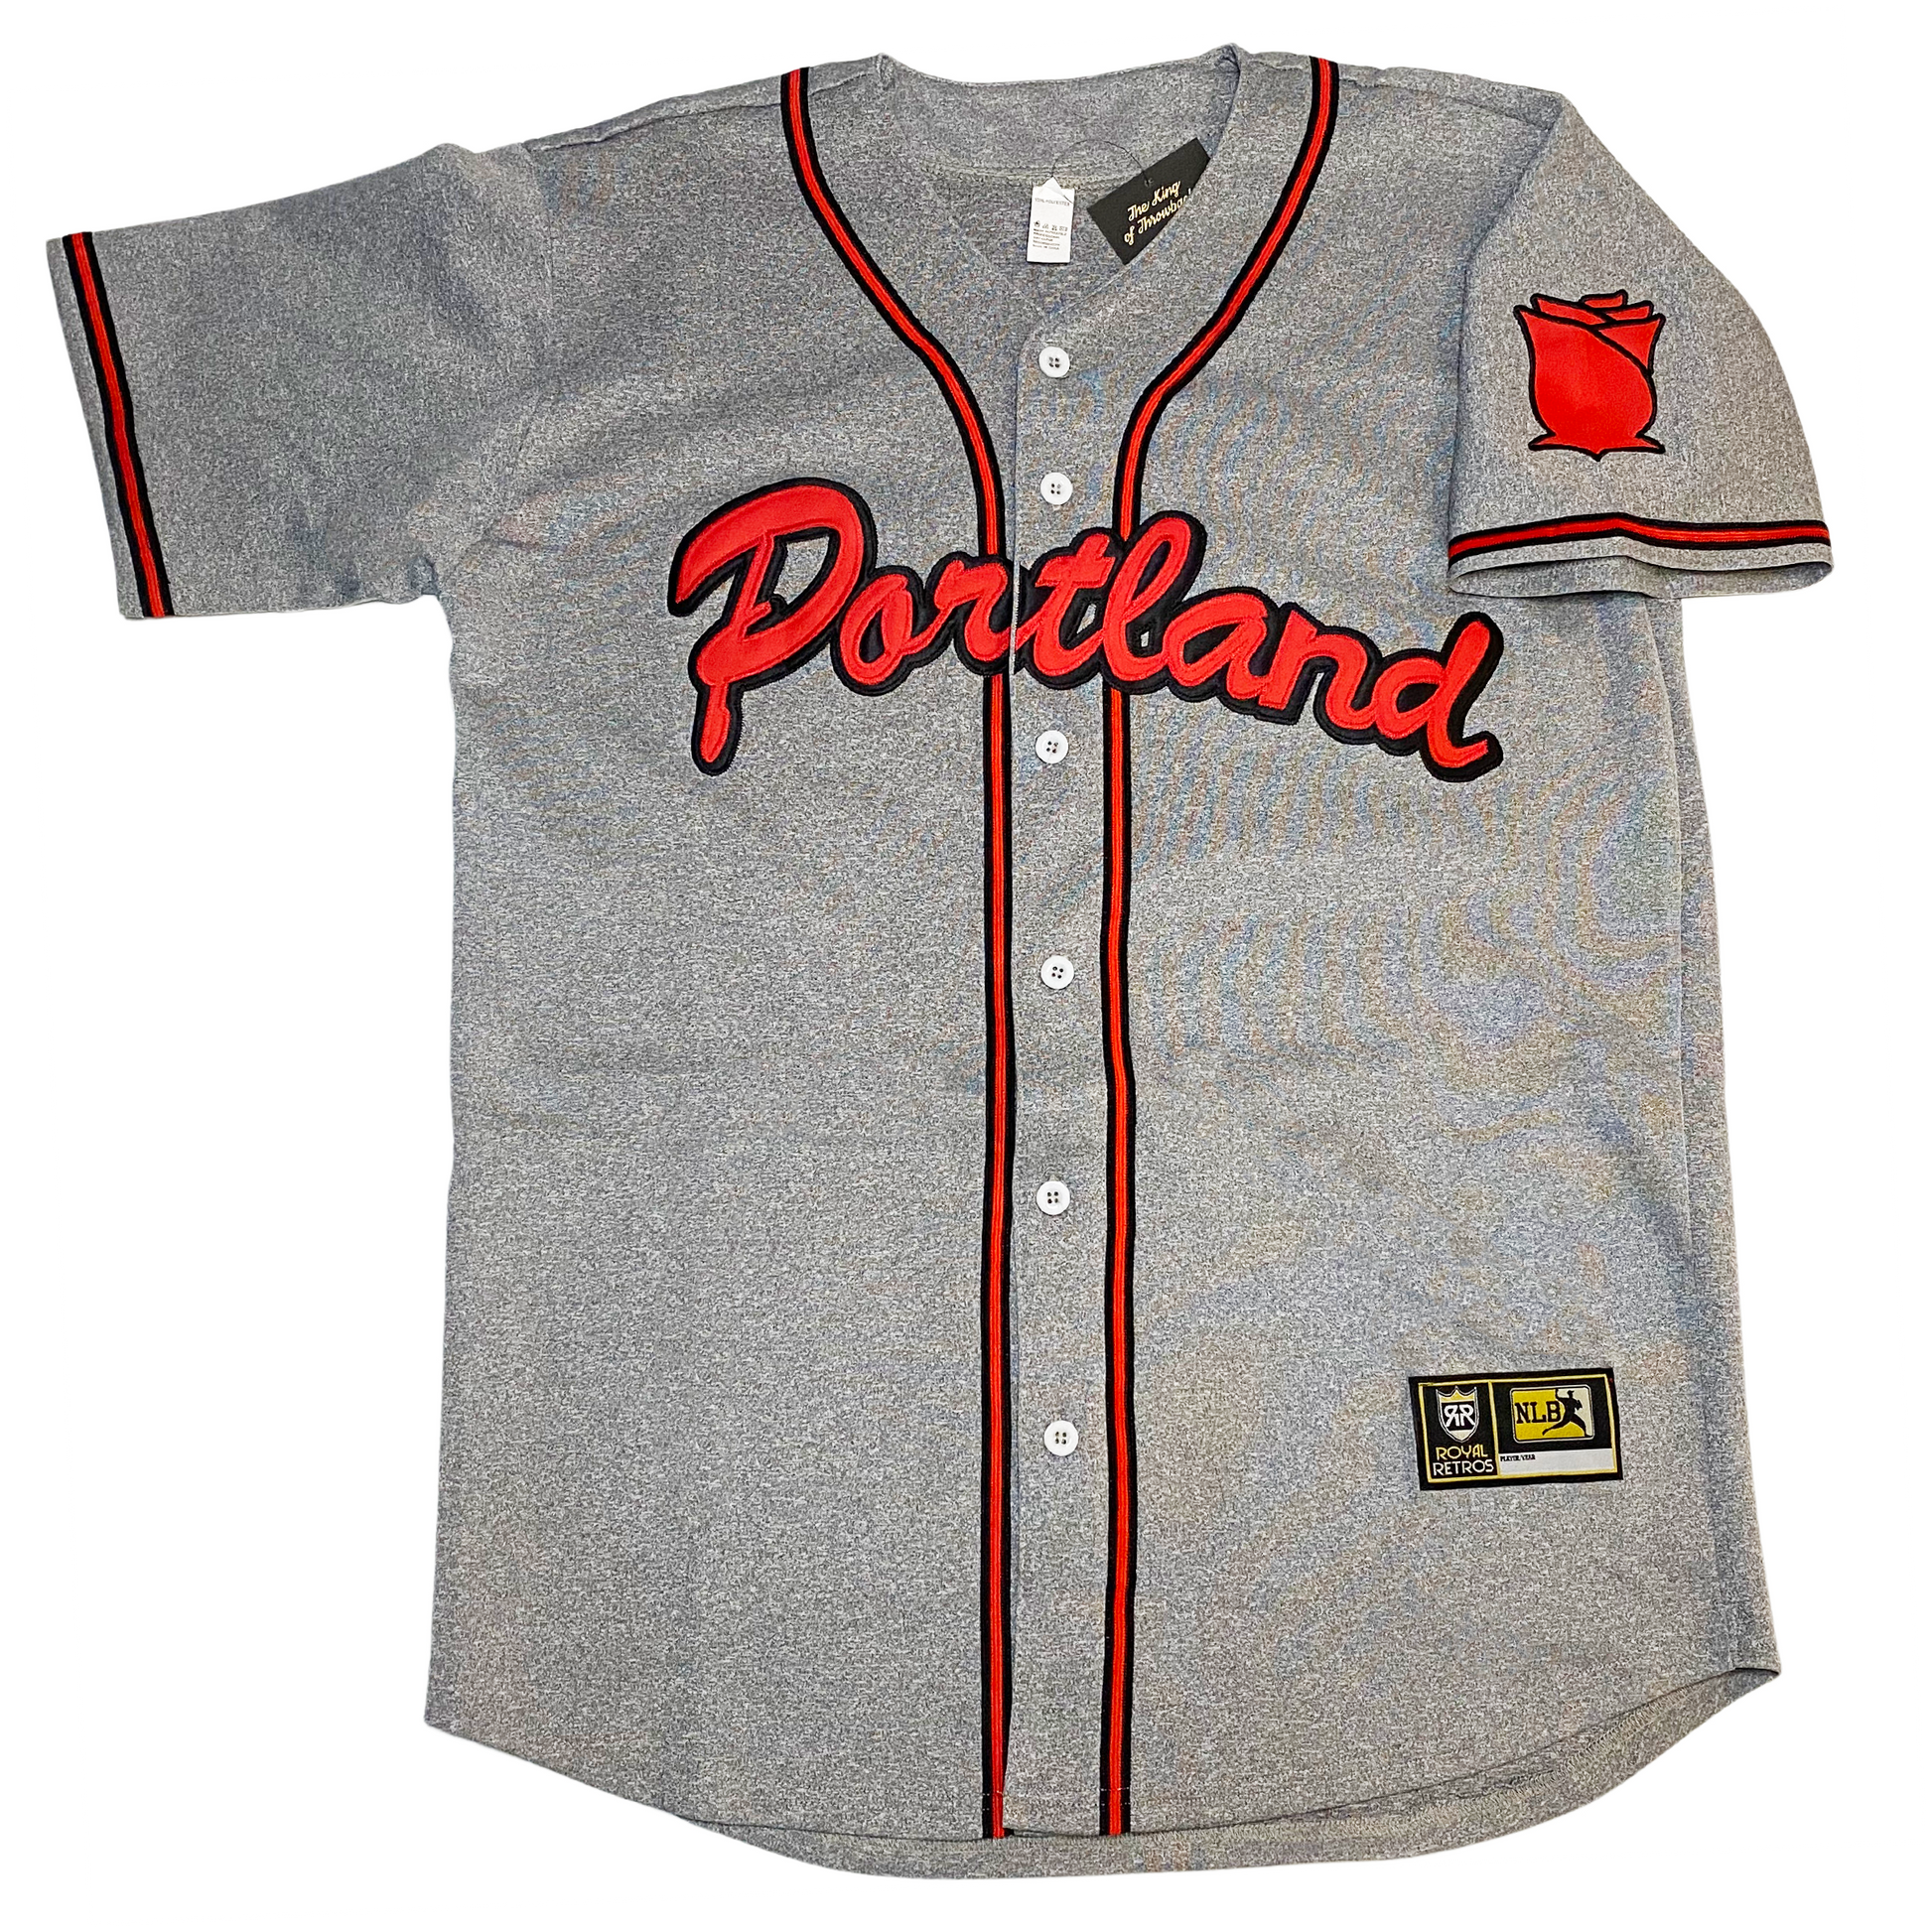 Portland Mavericks Jersey - Red - 5XL - Royal Retros